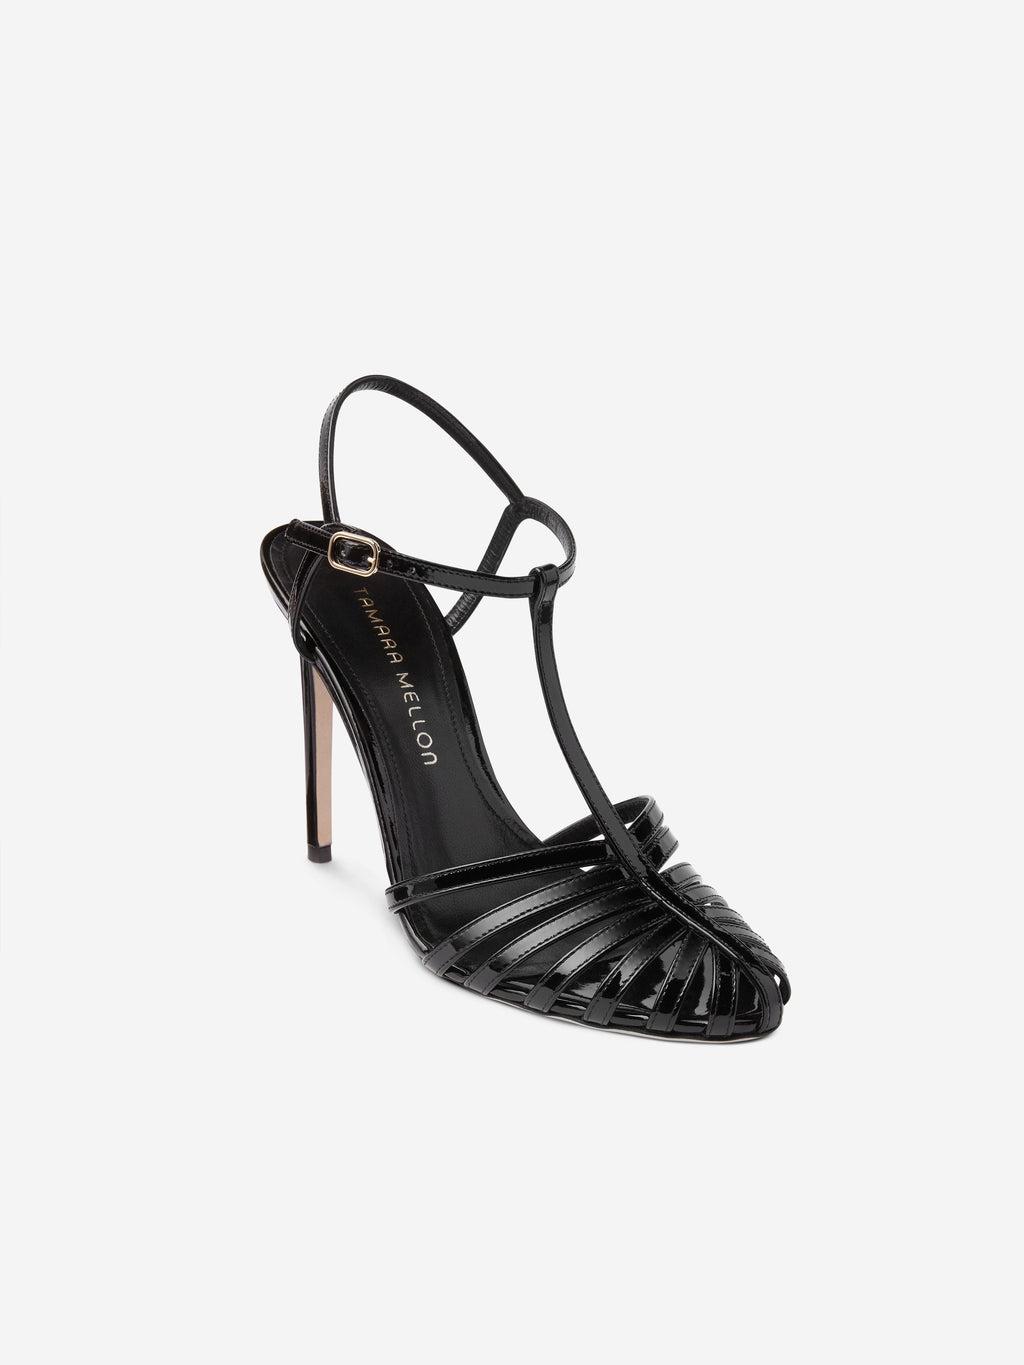 Tamara Mellon Studio 54 High-heel Sandals in Black | Lyst